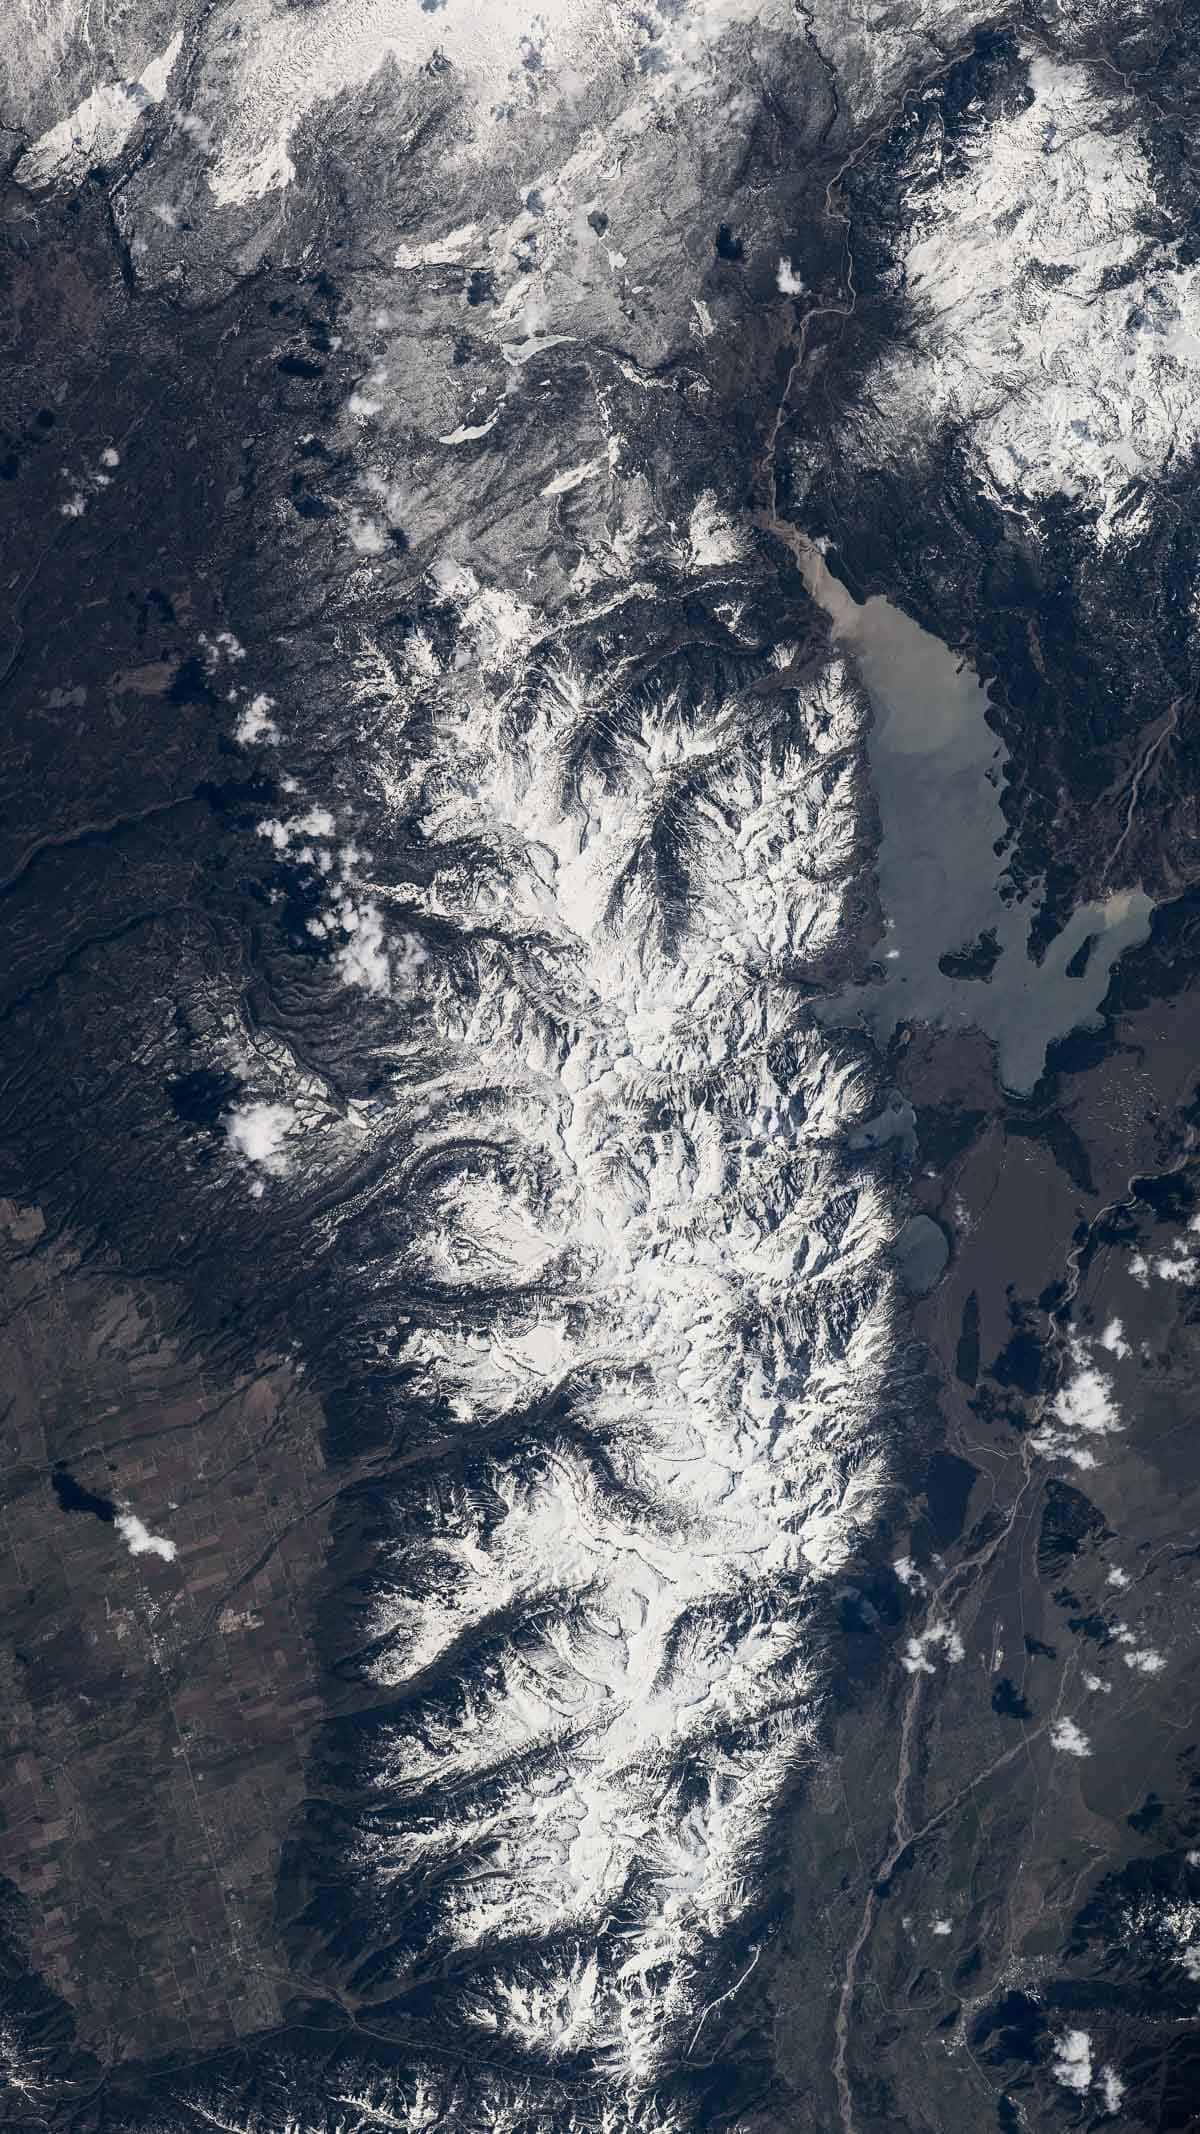 Grand Teton National Park seen from space - Credit NASA Jeff Williams